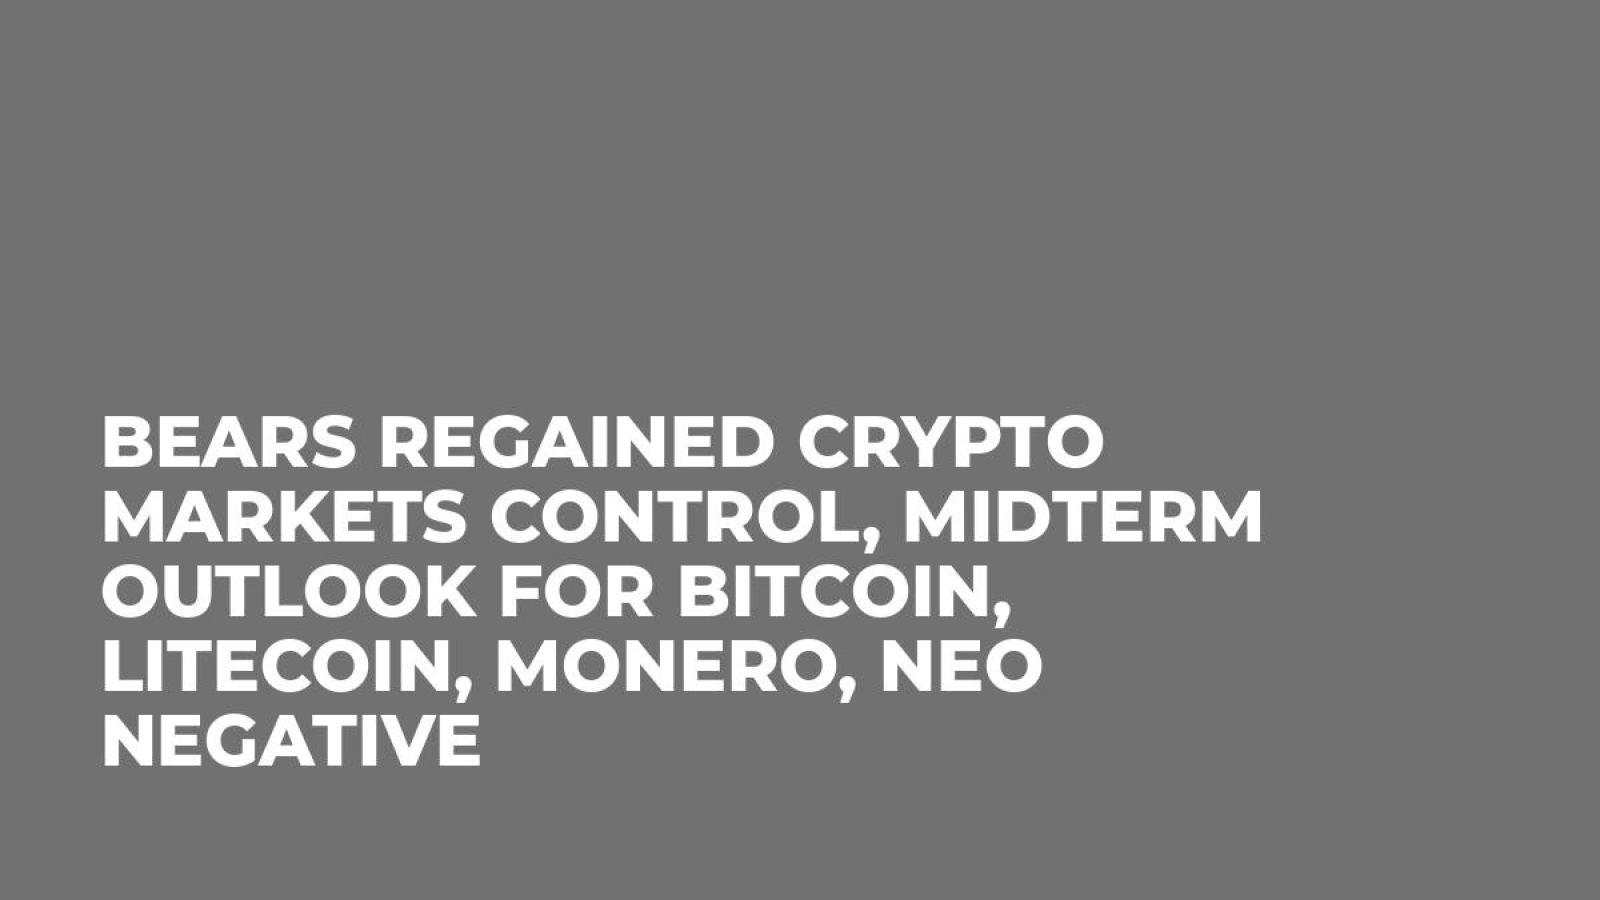 Bears Regained Crypto Markets Control, Midterm Outlook for Bitcoin, Litecoin, Monero, NEO Negative